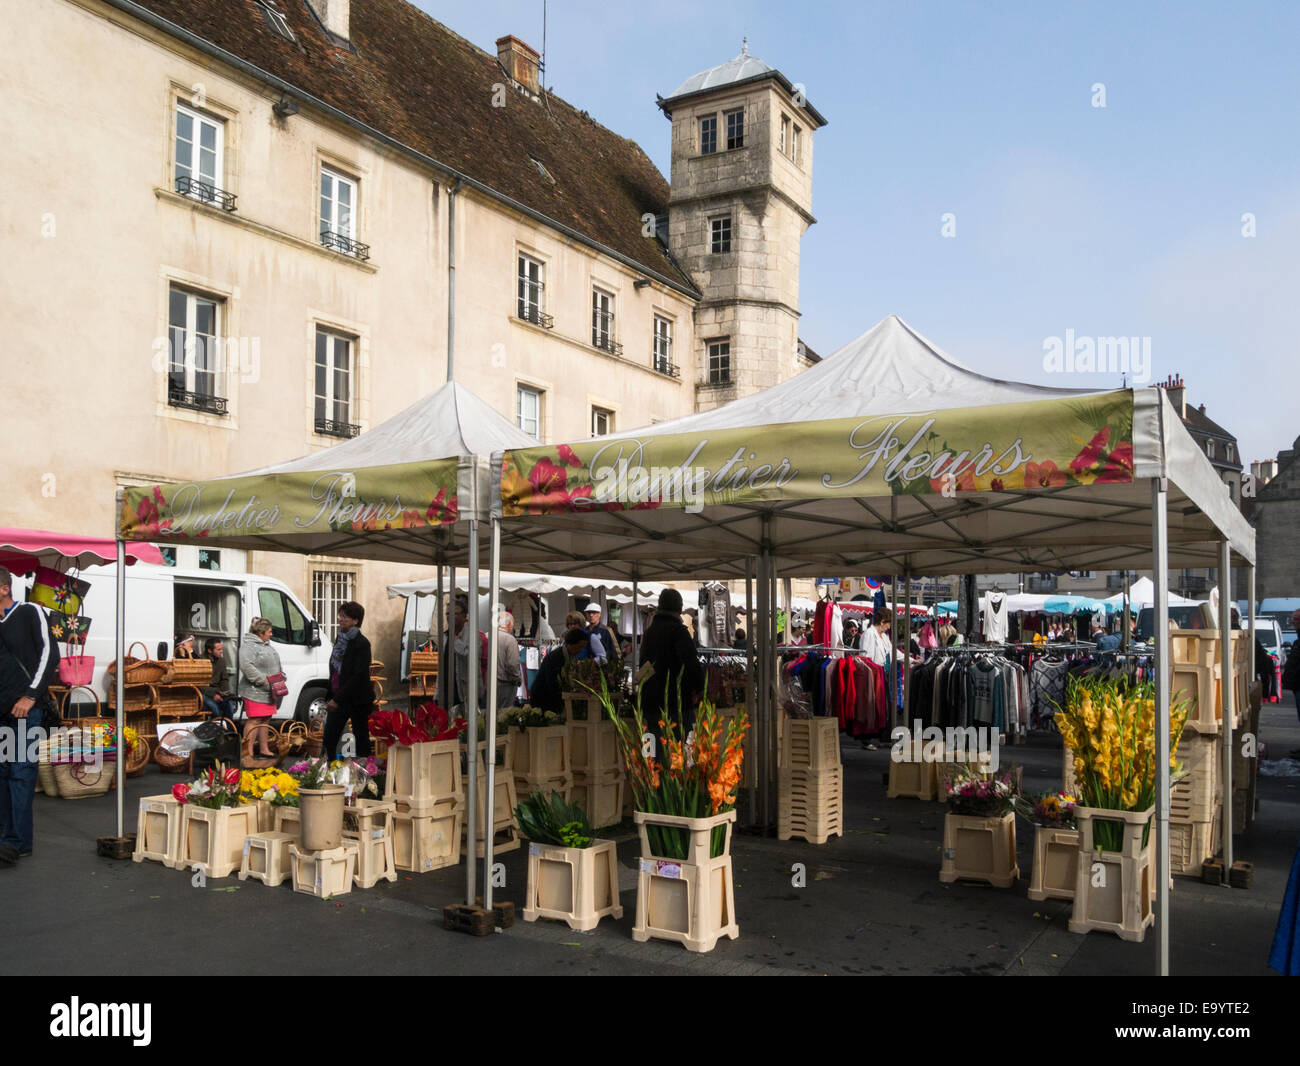 Samstag Marktstände in Place Nationale Dole Franche-Compte Frankreich EU Stockfoto